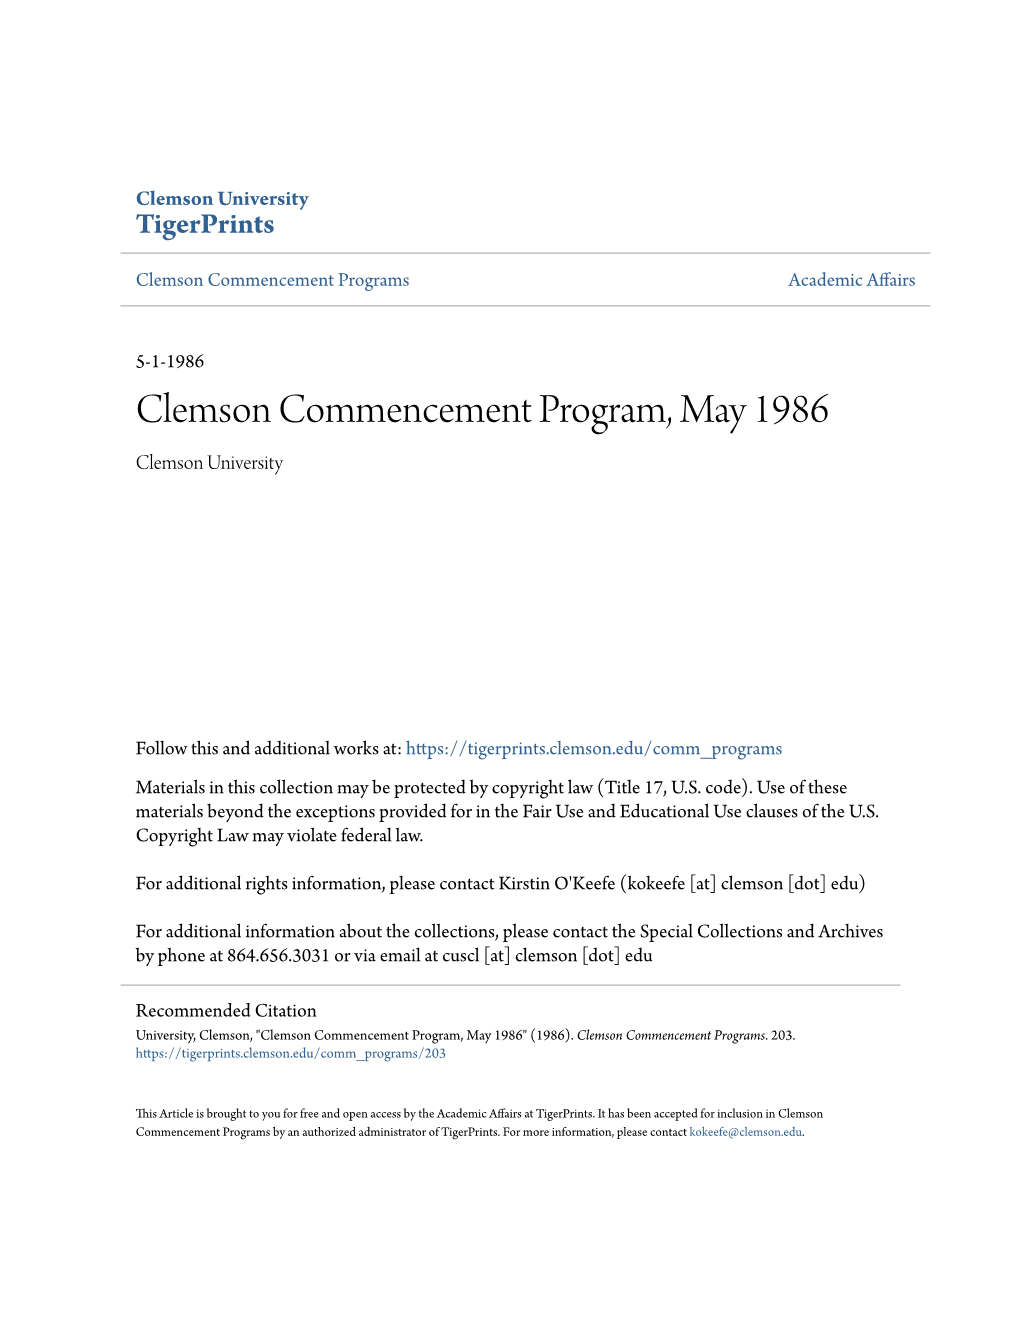 Clemson Commencement Program, May 1986 Clemson University